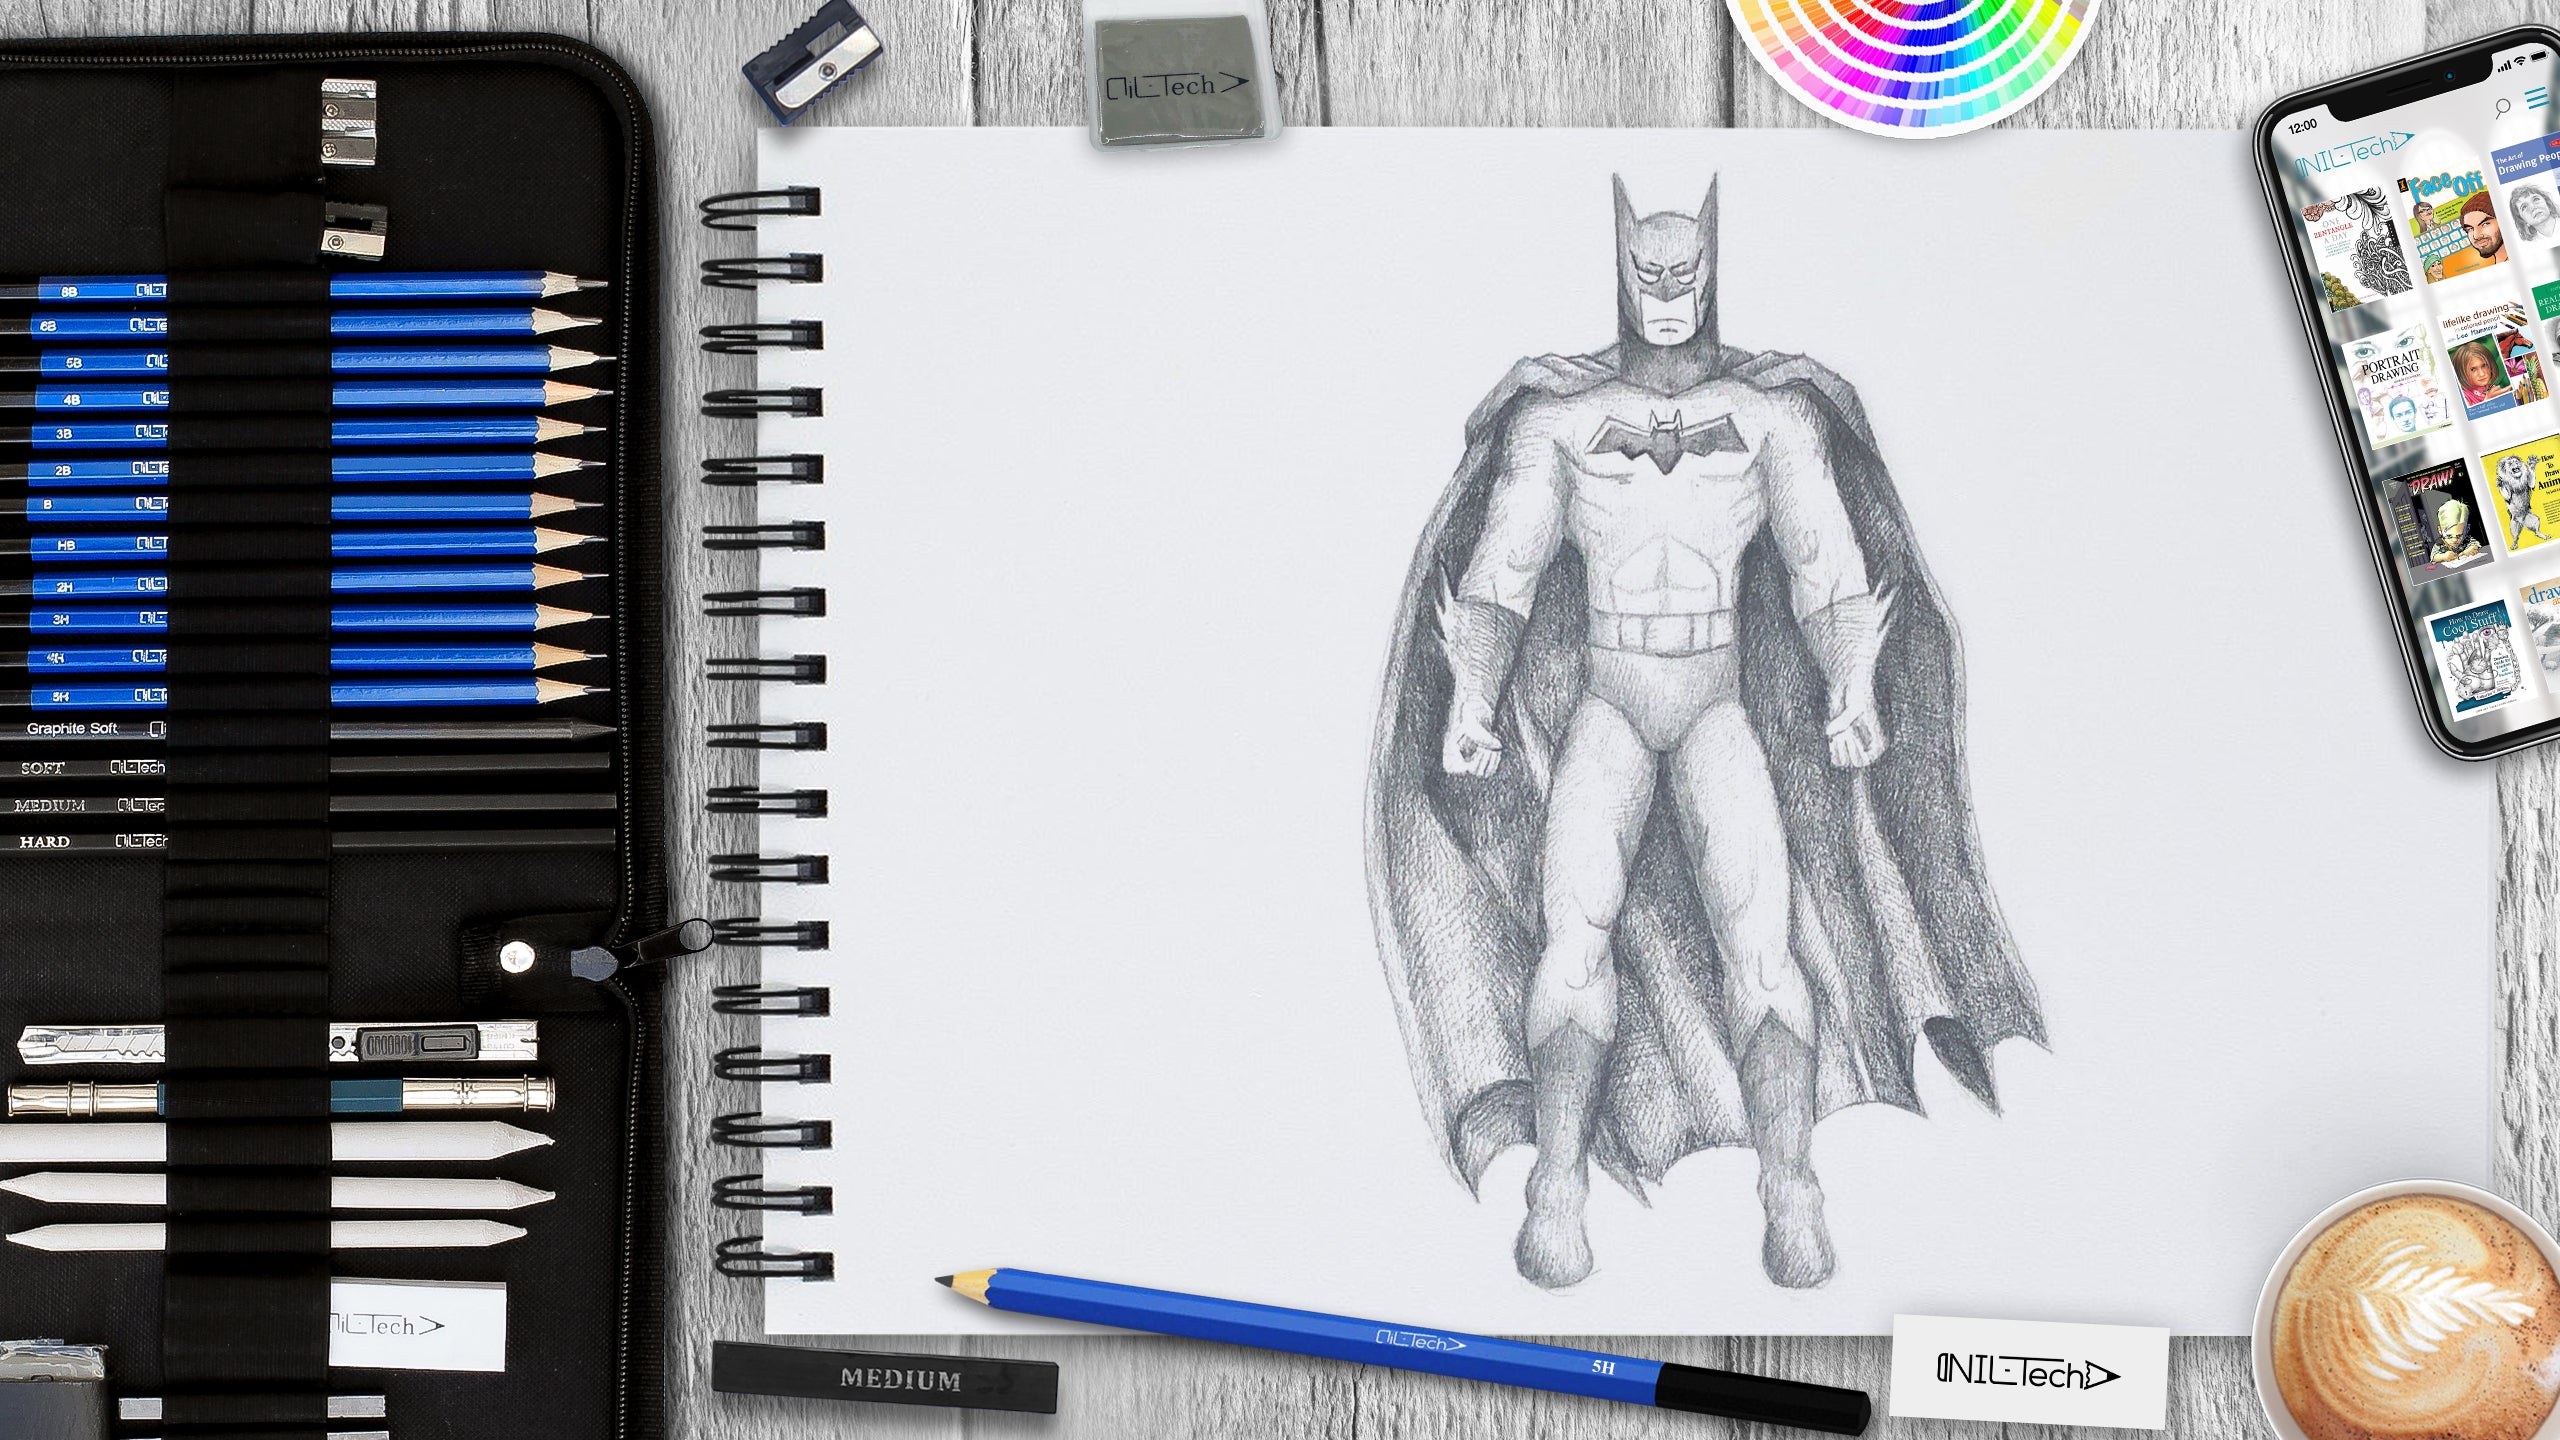 cool drawings of batman